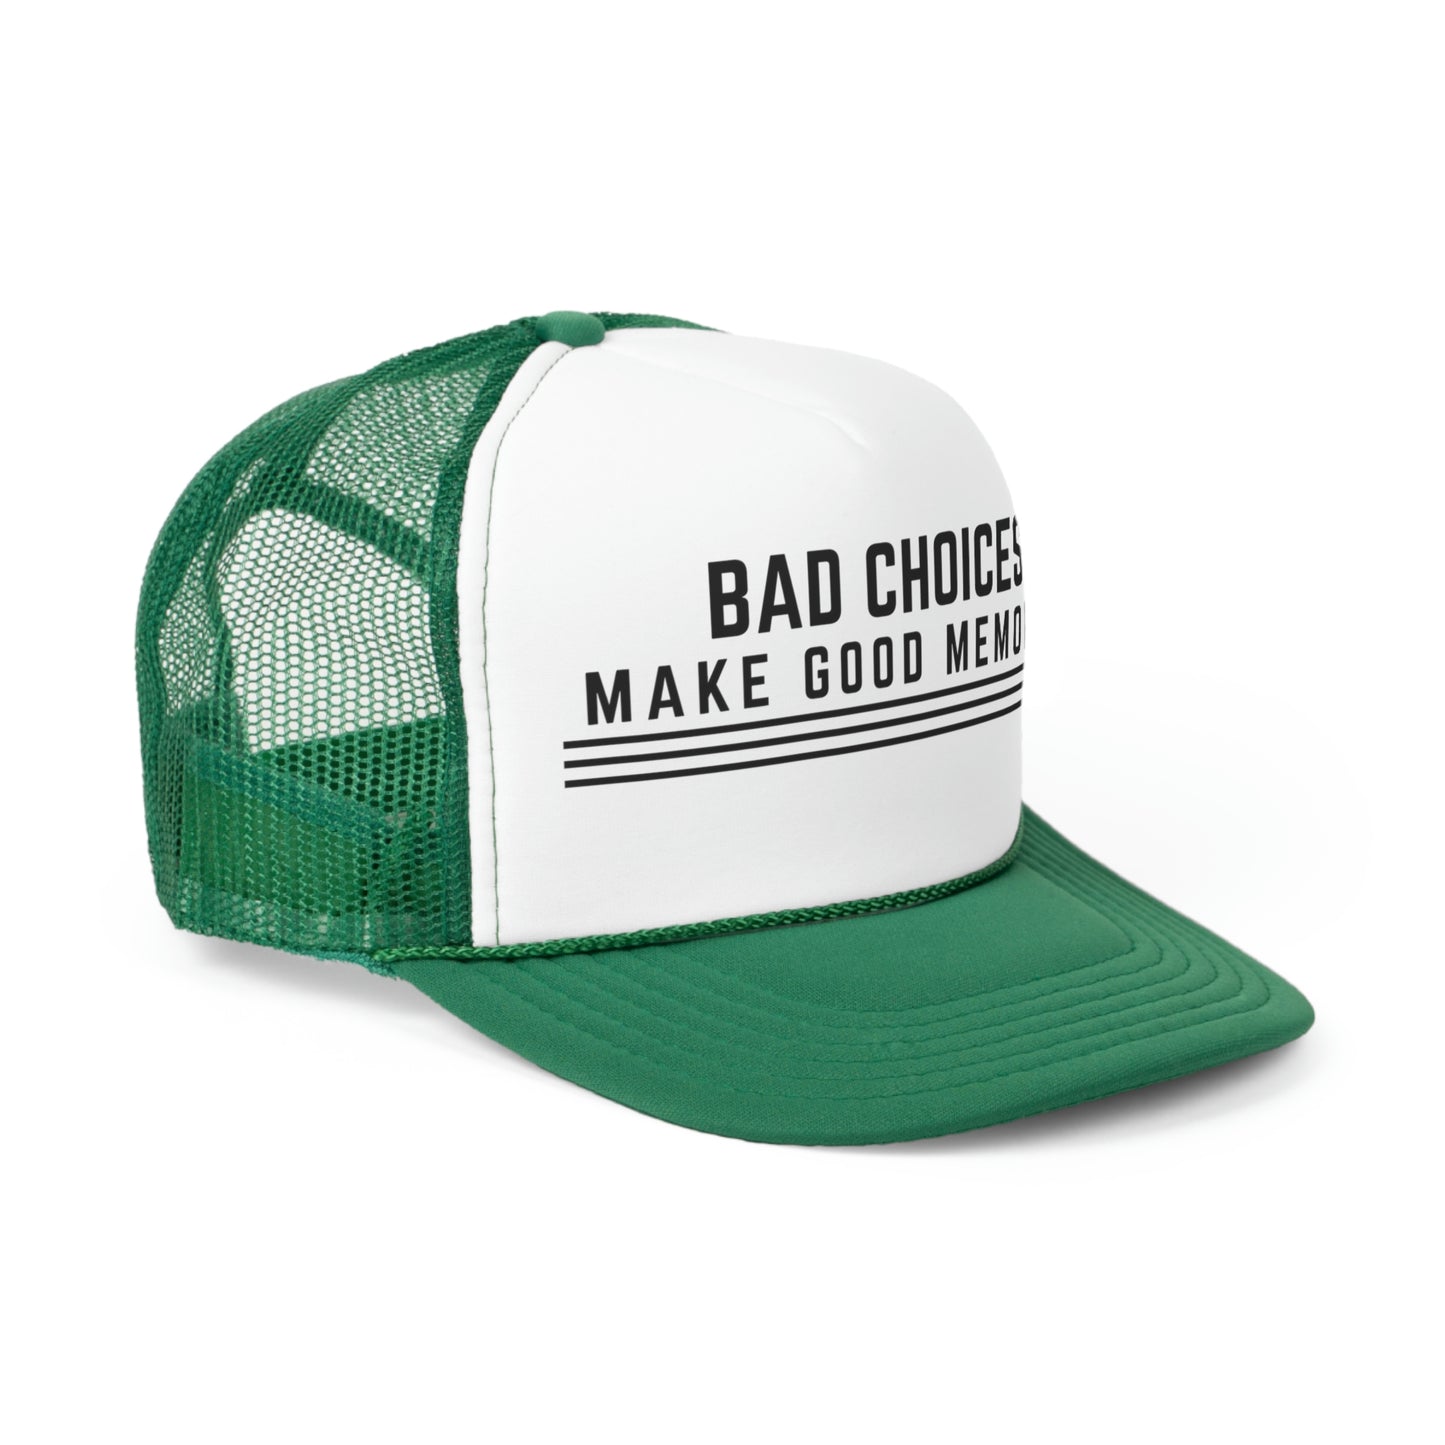 Bad Choices Make Good Memories Trucker Caps